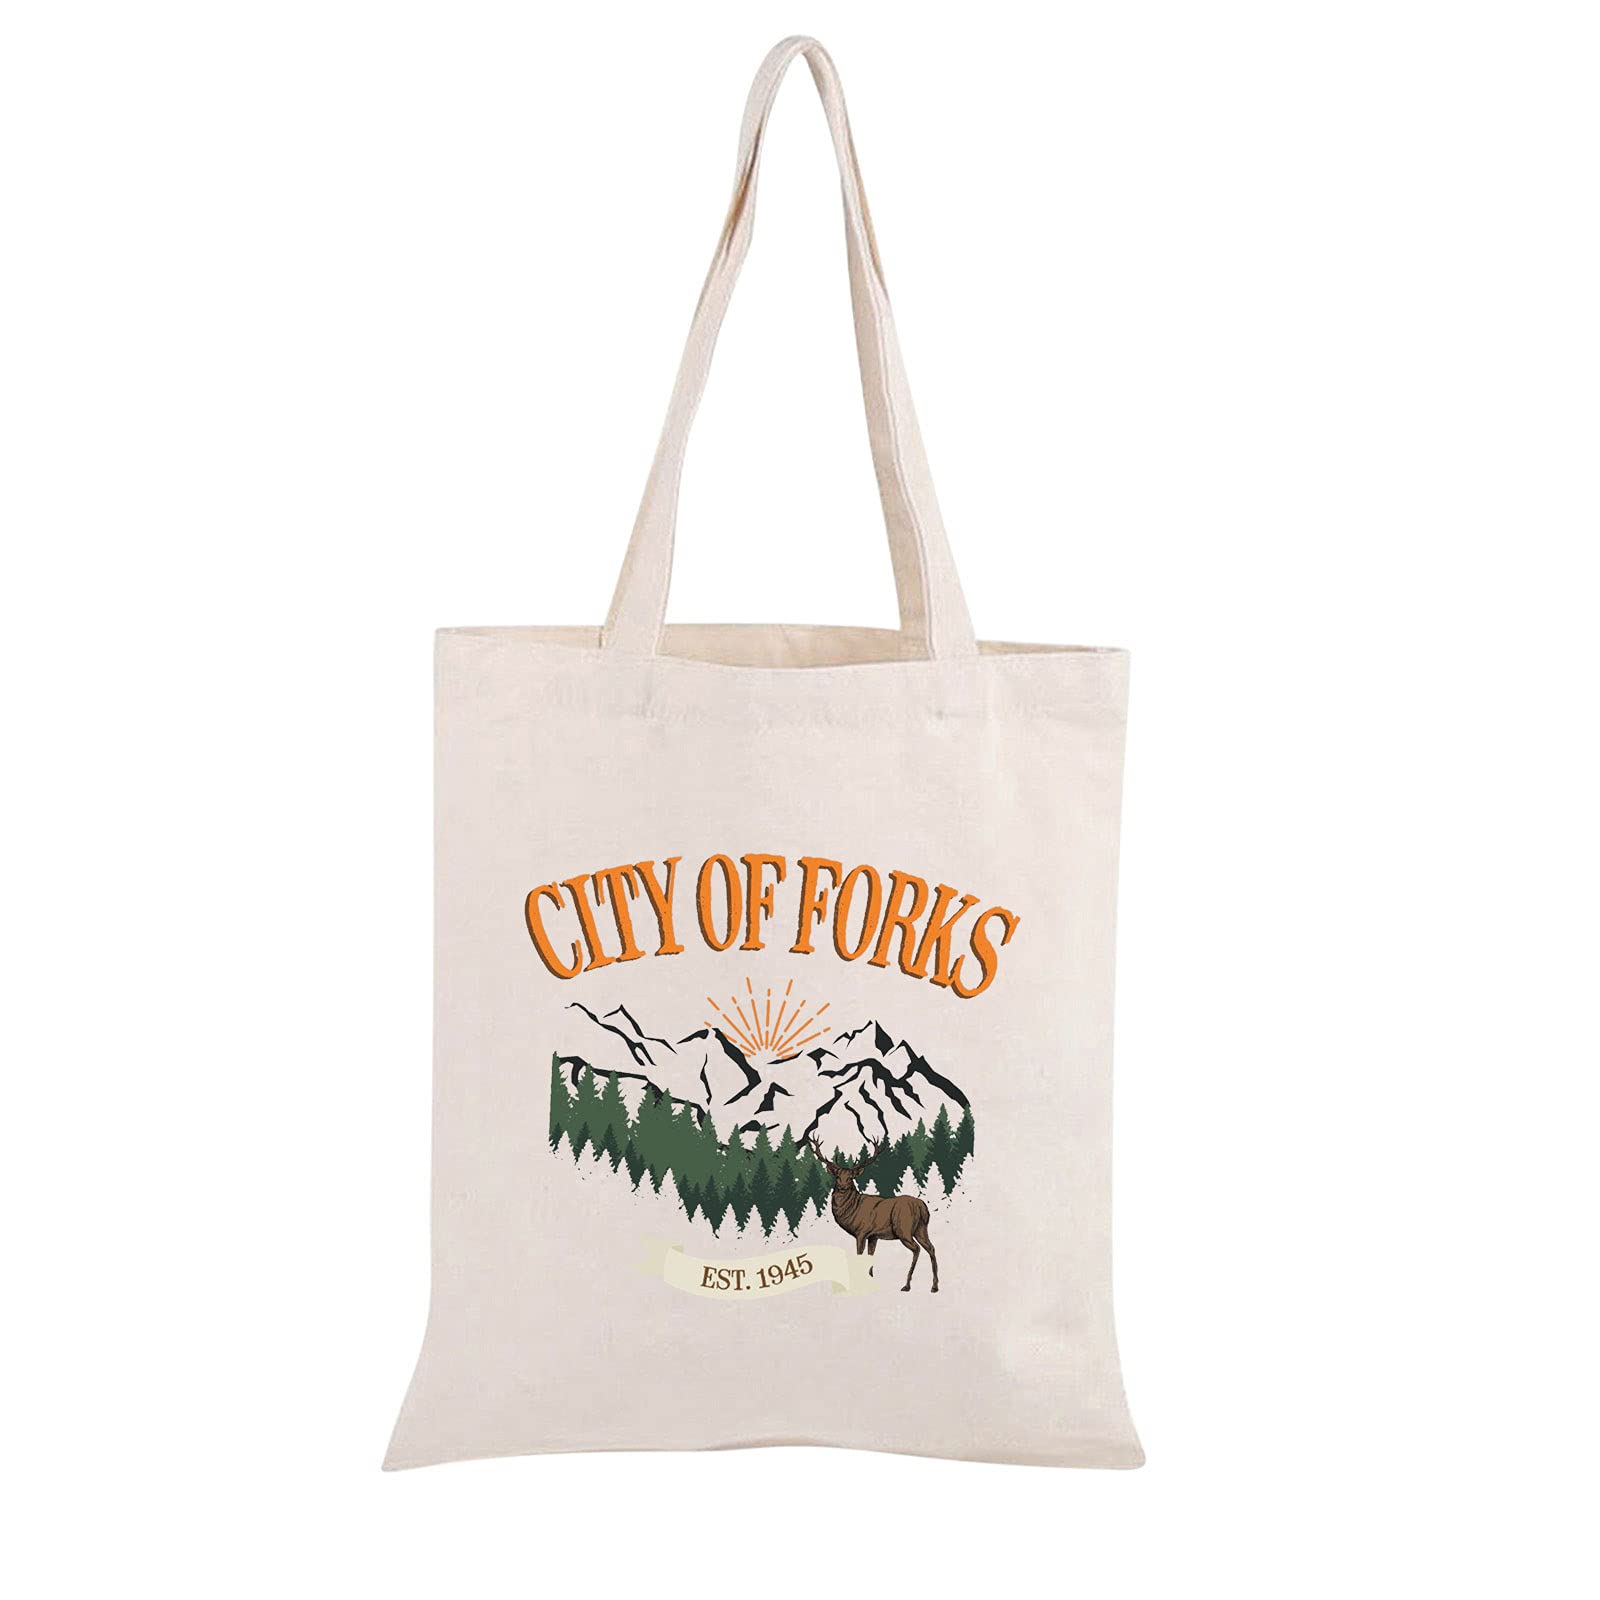 TOBGBE Forks Washington Gift TV Show Lover Tote Bag (City of Forks Tote)